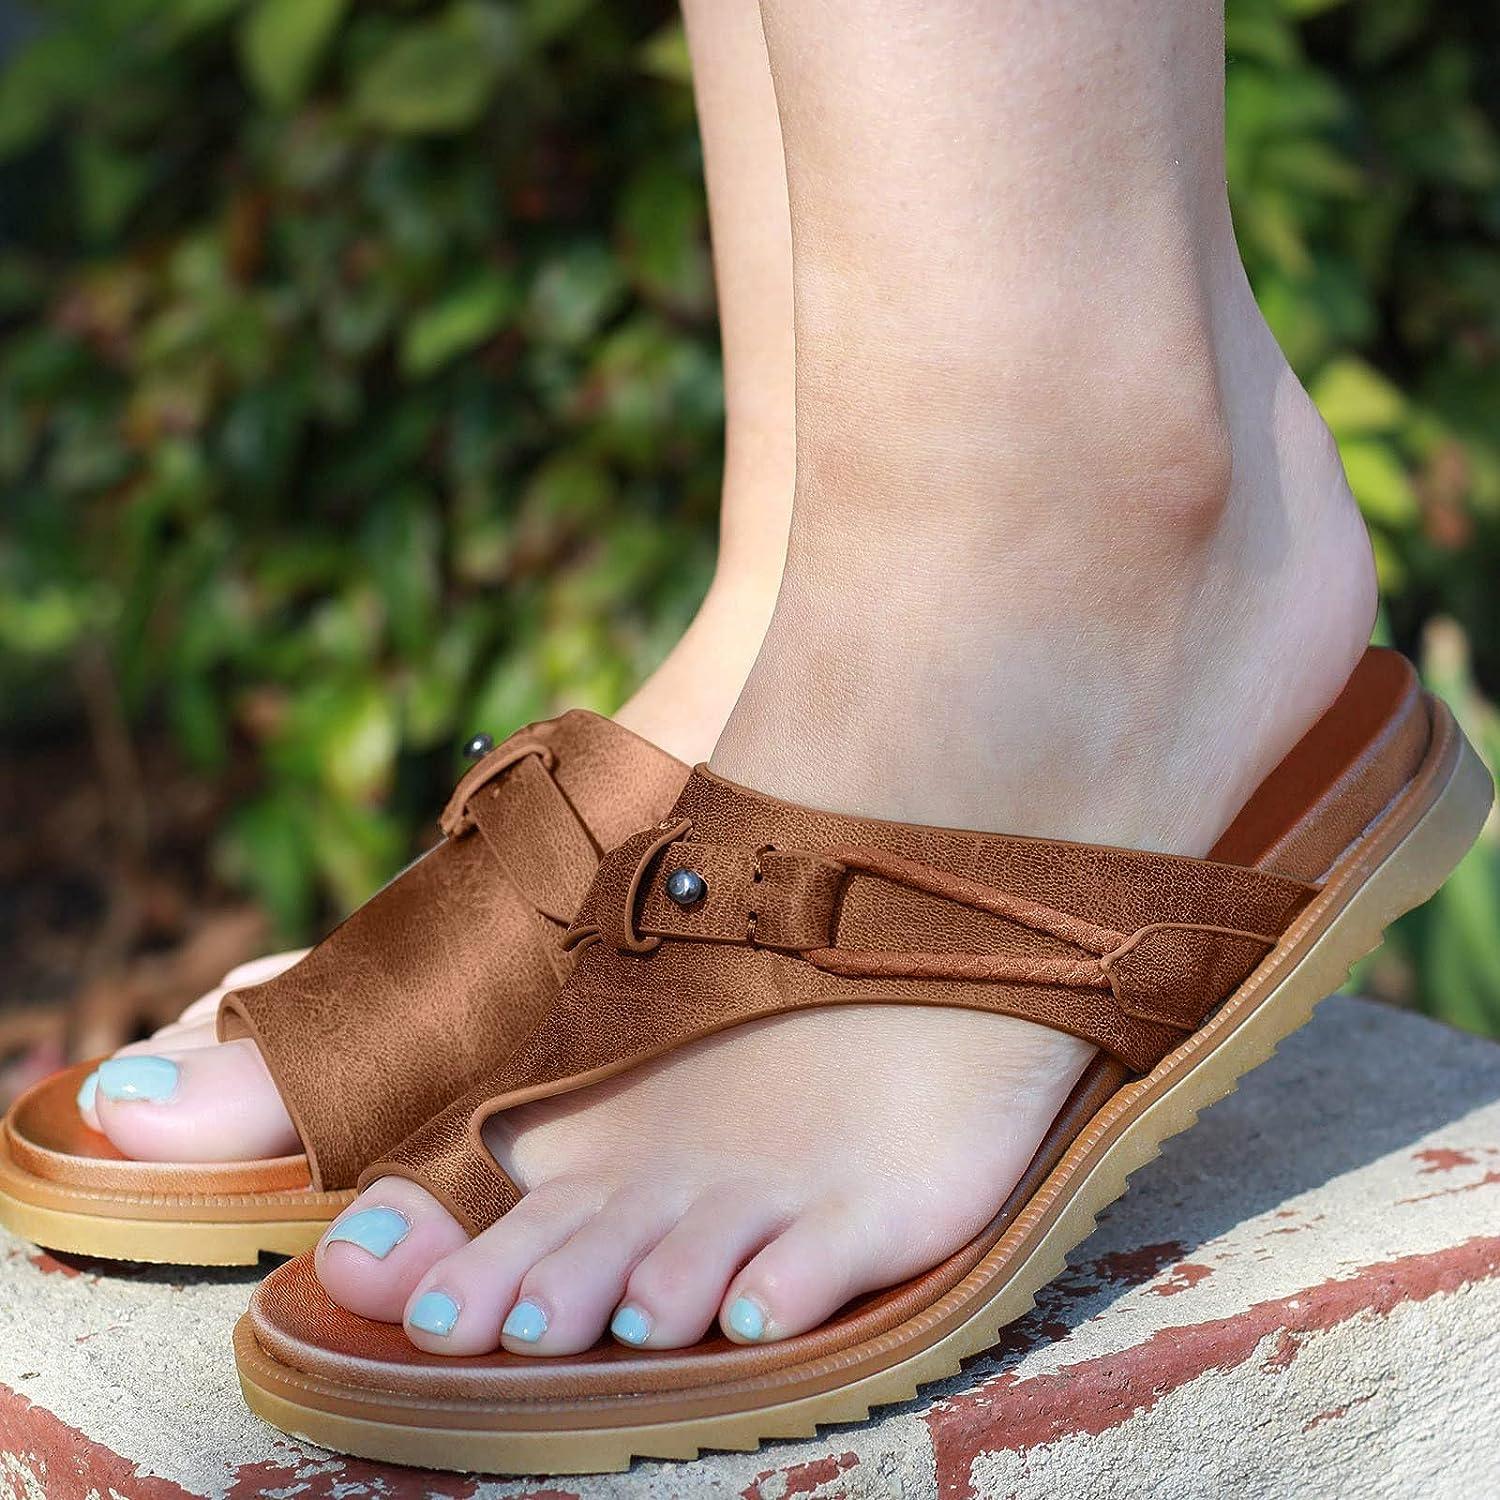 evzosrz Sandals for Women Orthopedic Sandals Casual Summer Beach